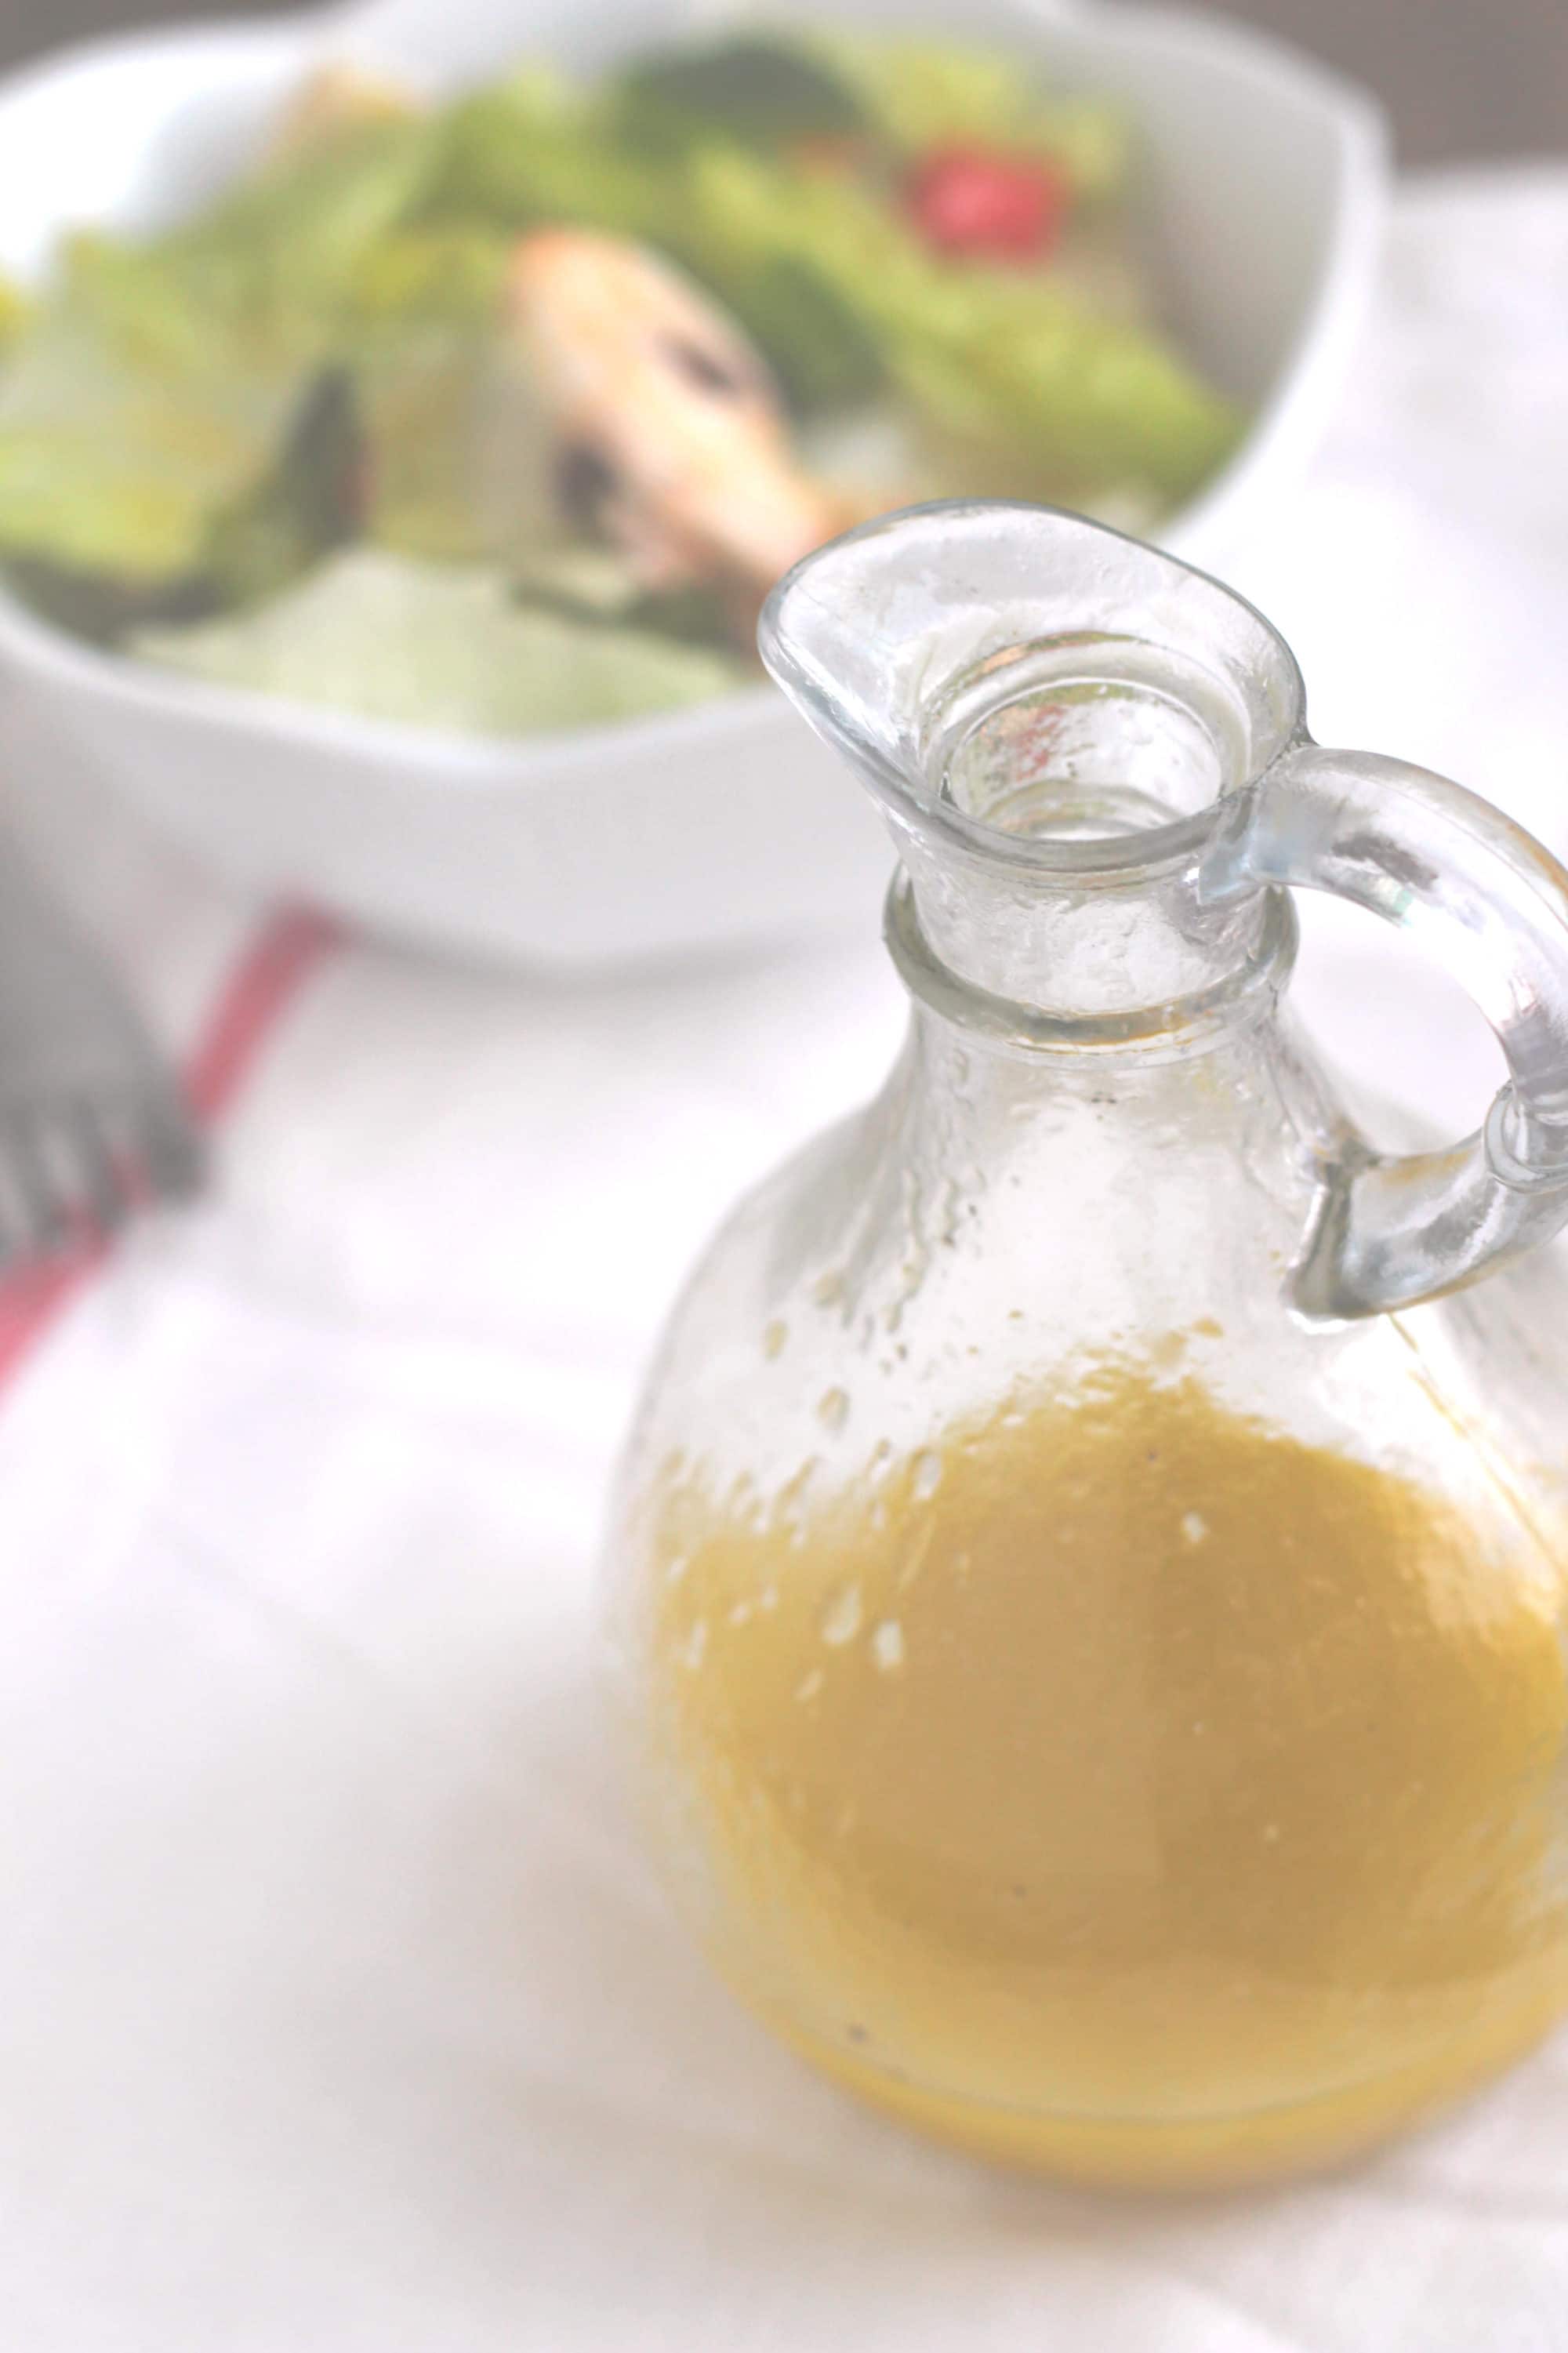 Lemon vinaigrette salad dressing in a glass container